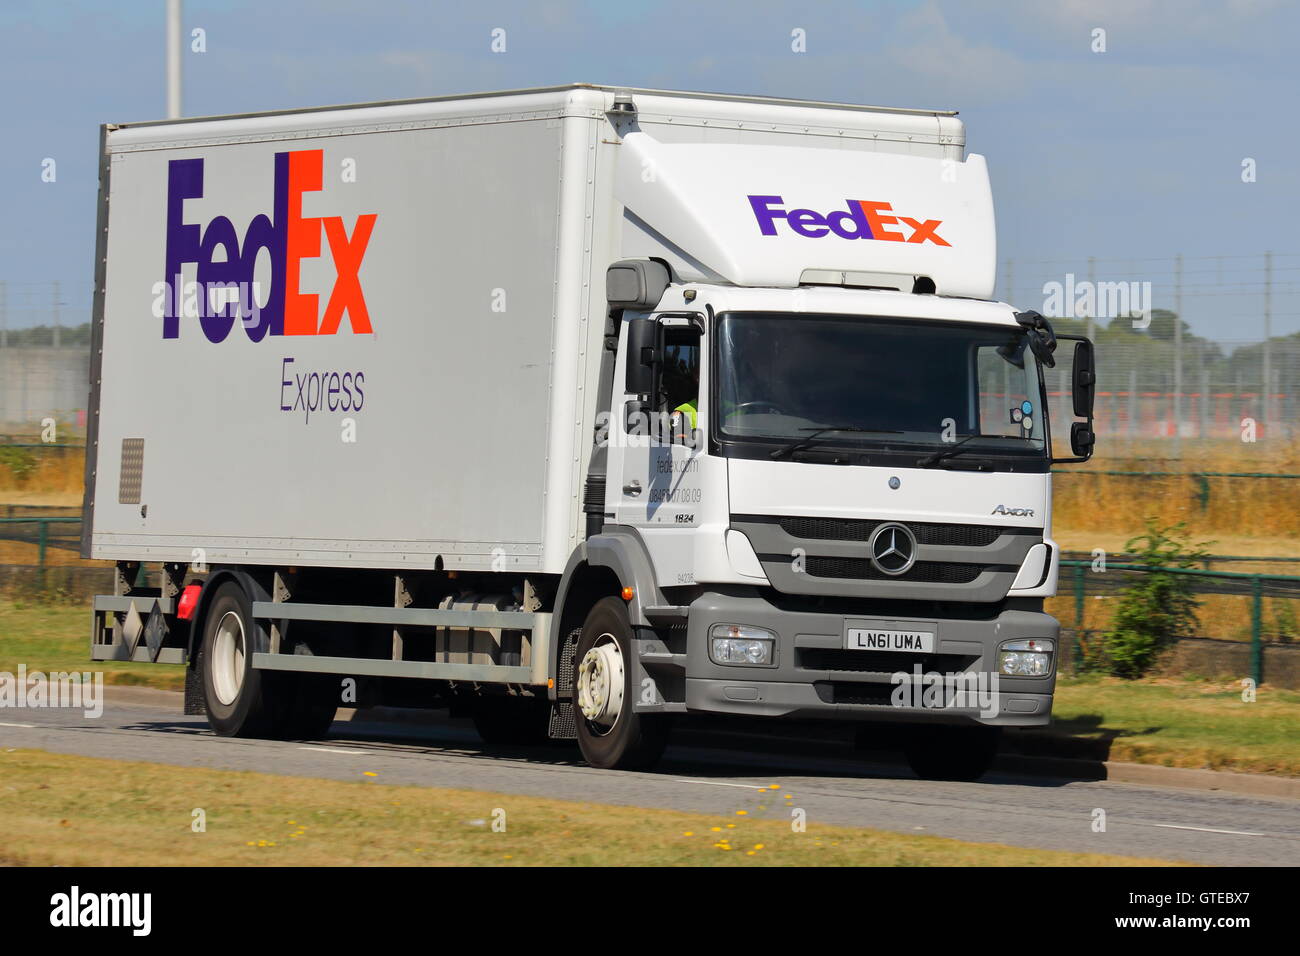 Fedex lorry near London Heathrow Airport Stock Photo